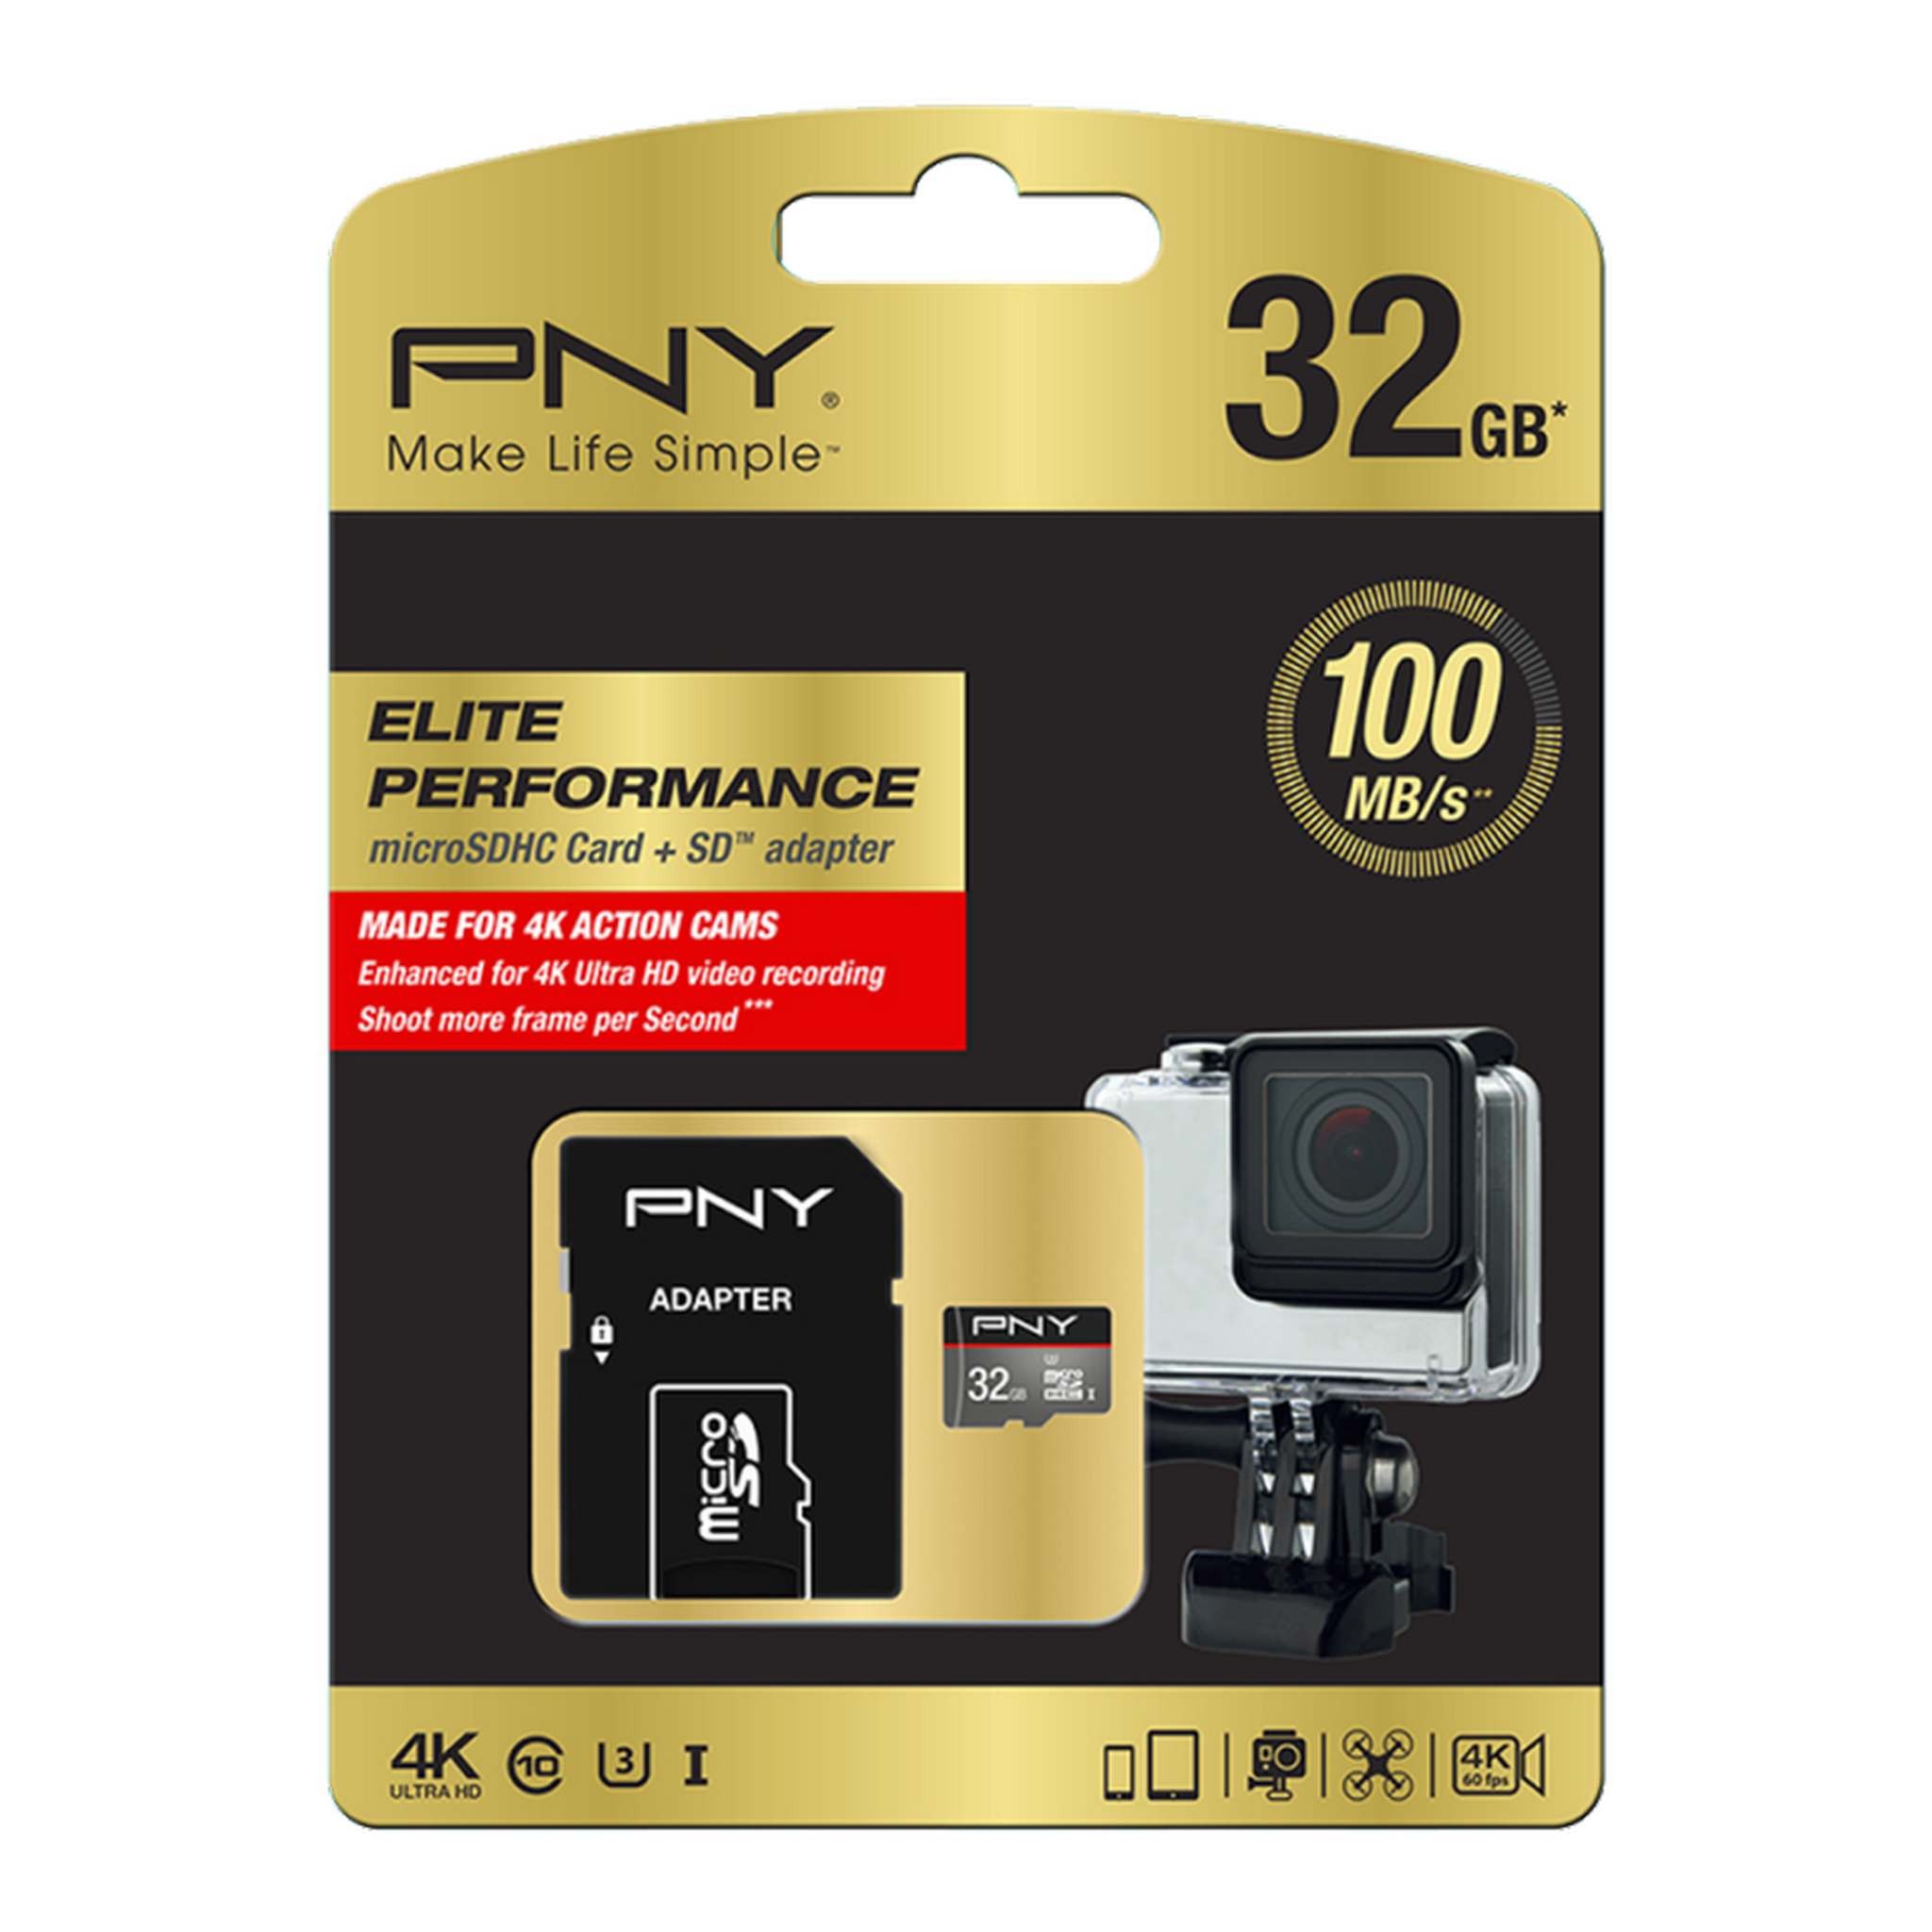 PNY 32GB microSD Class 10 Memory Card - Black